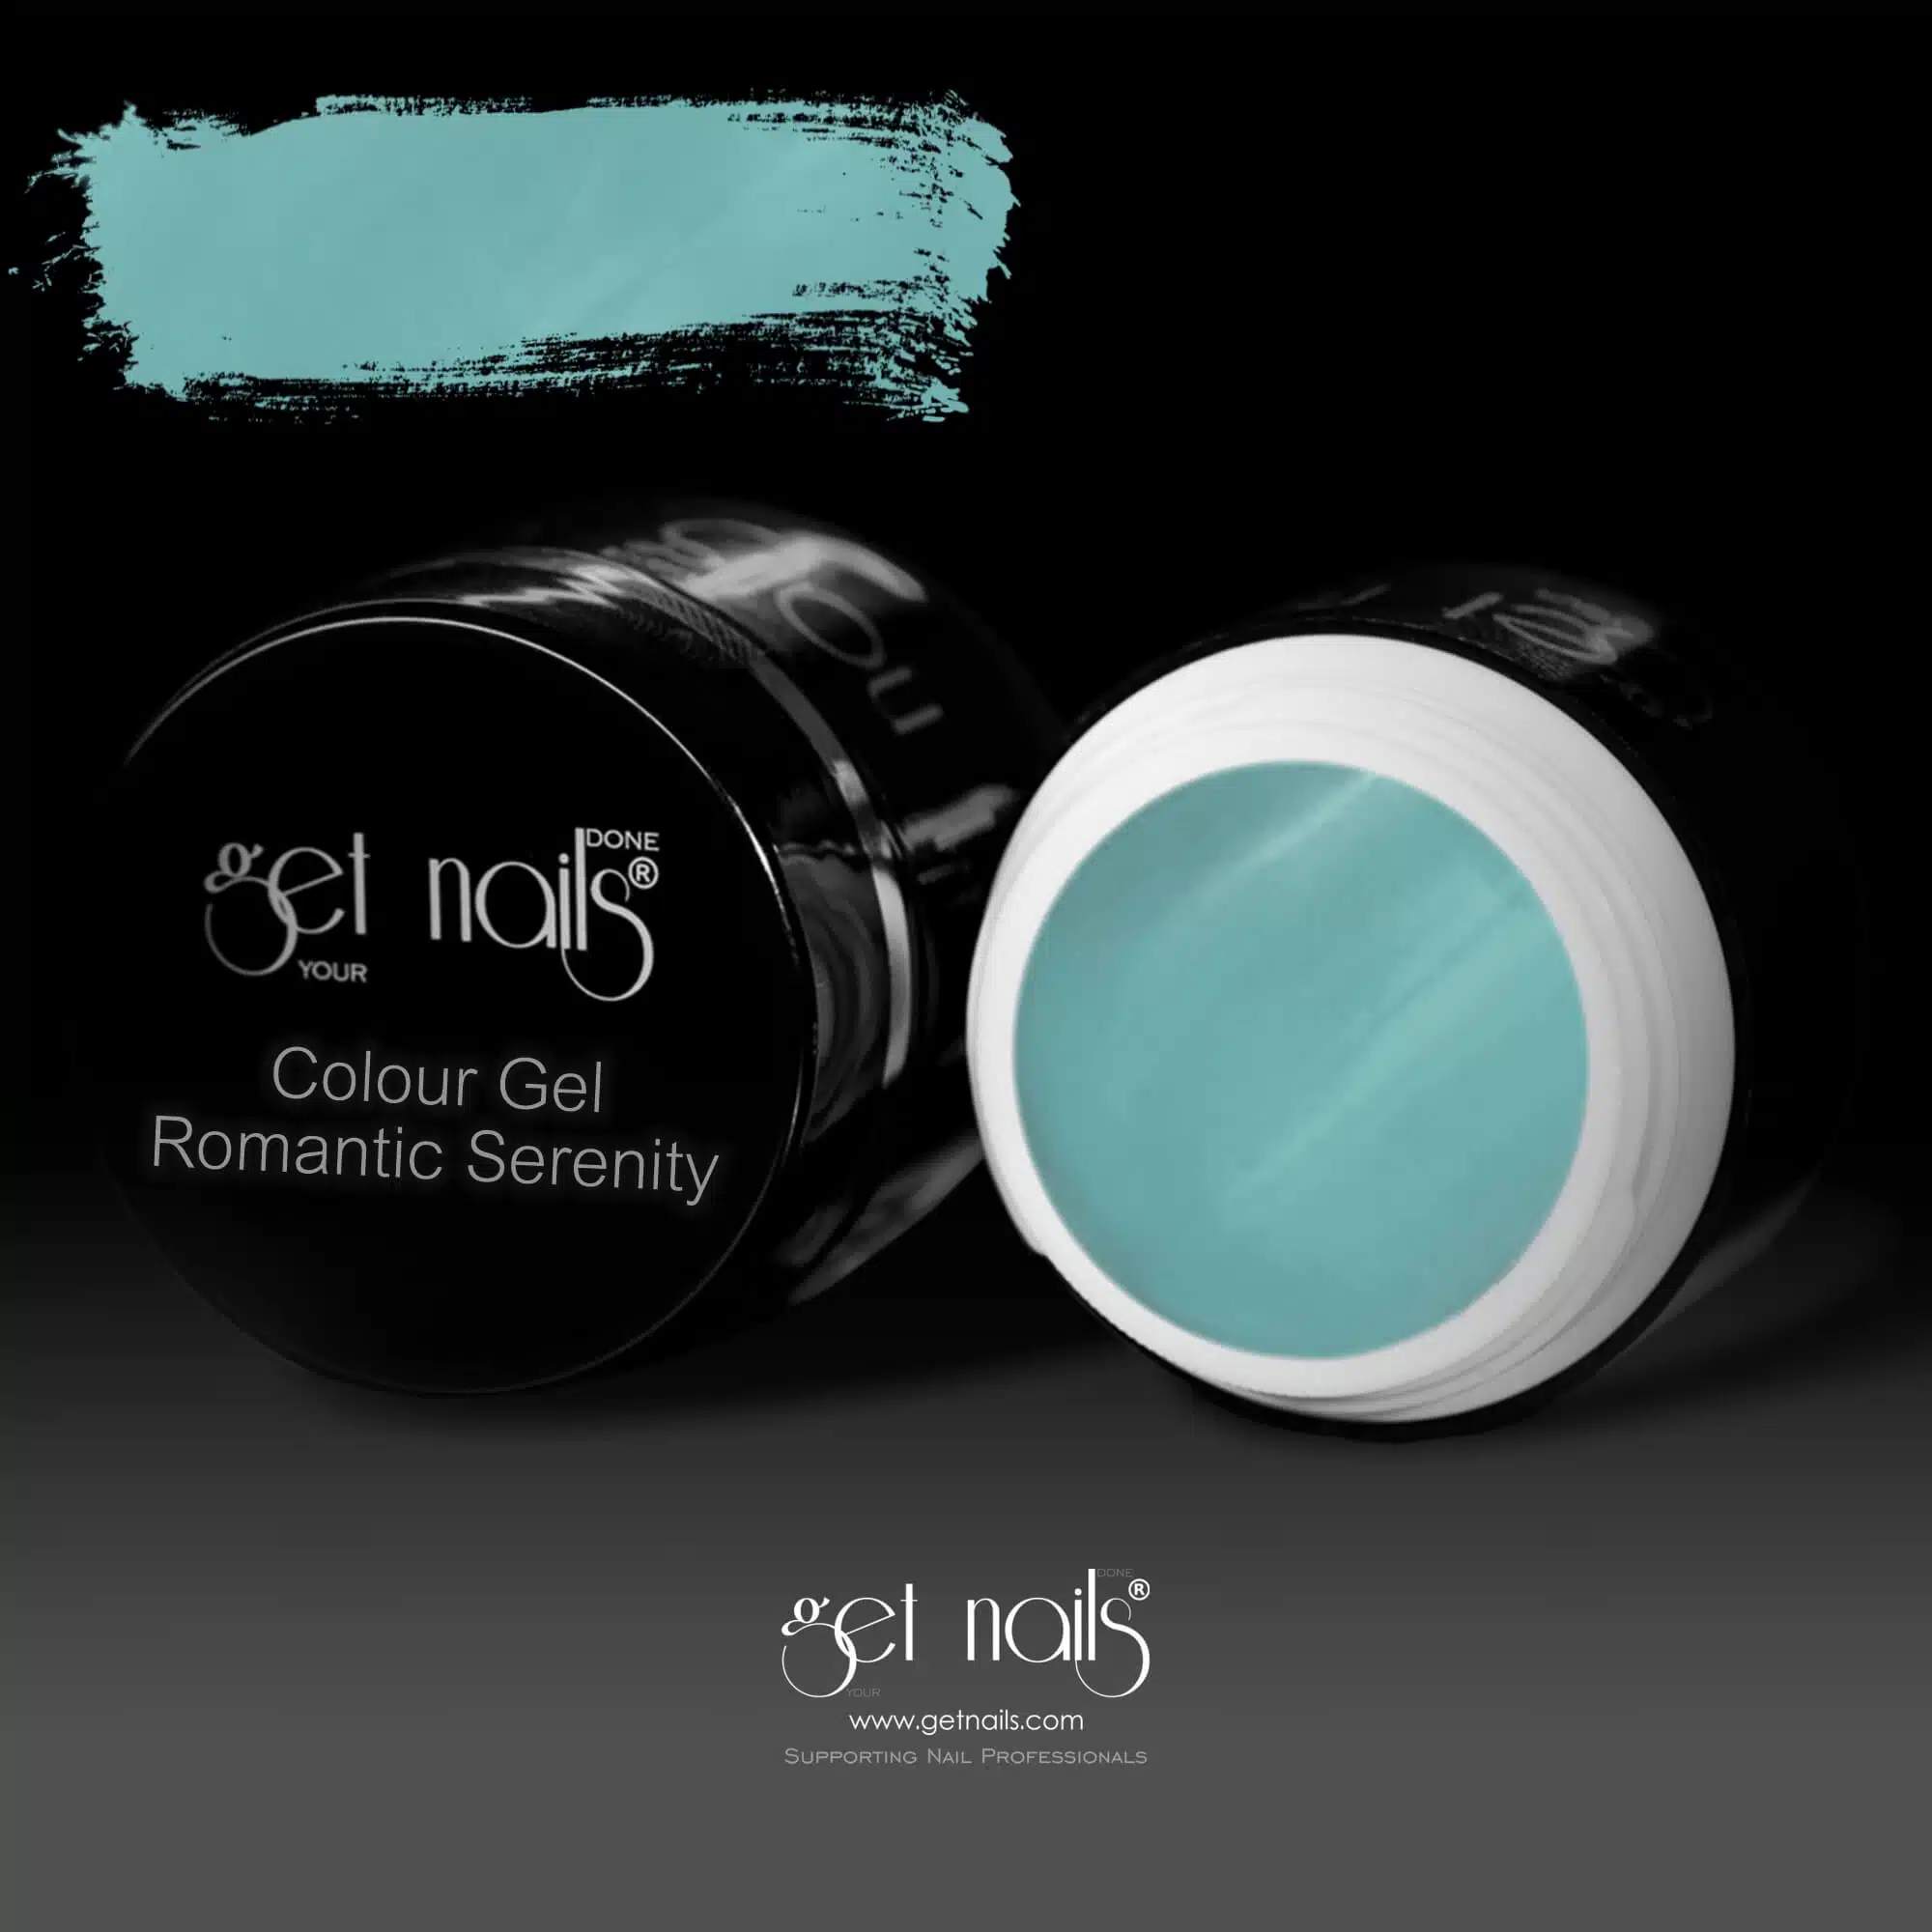 Get Nails Austria - Colour Gel Romantic Serenity 5g